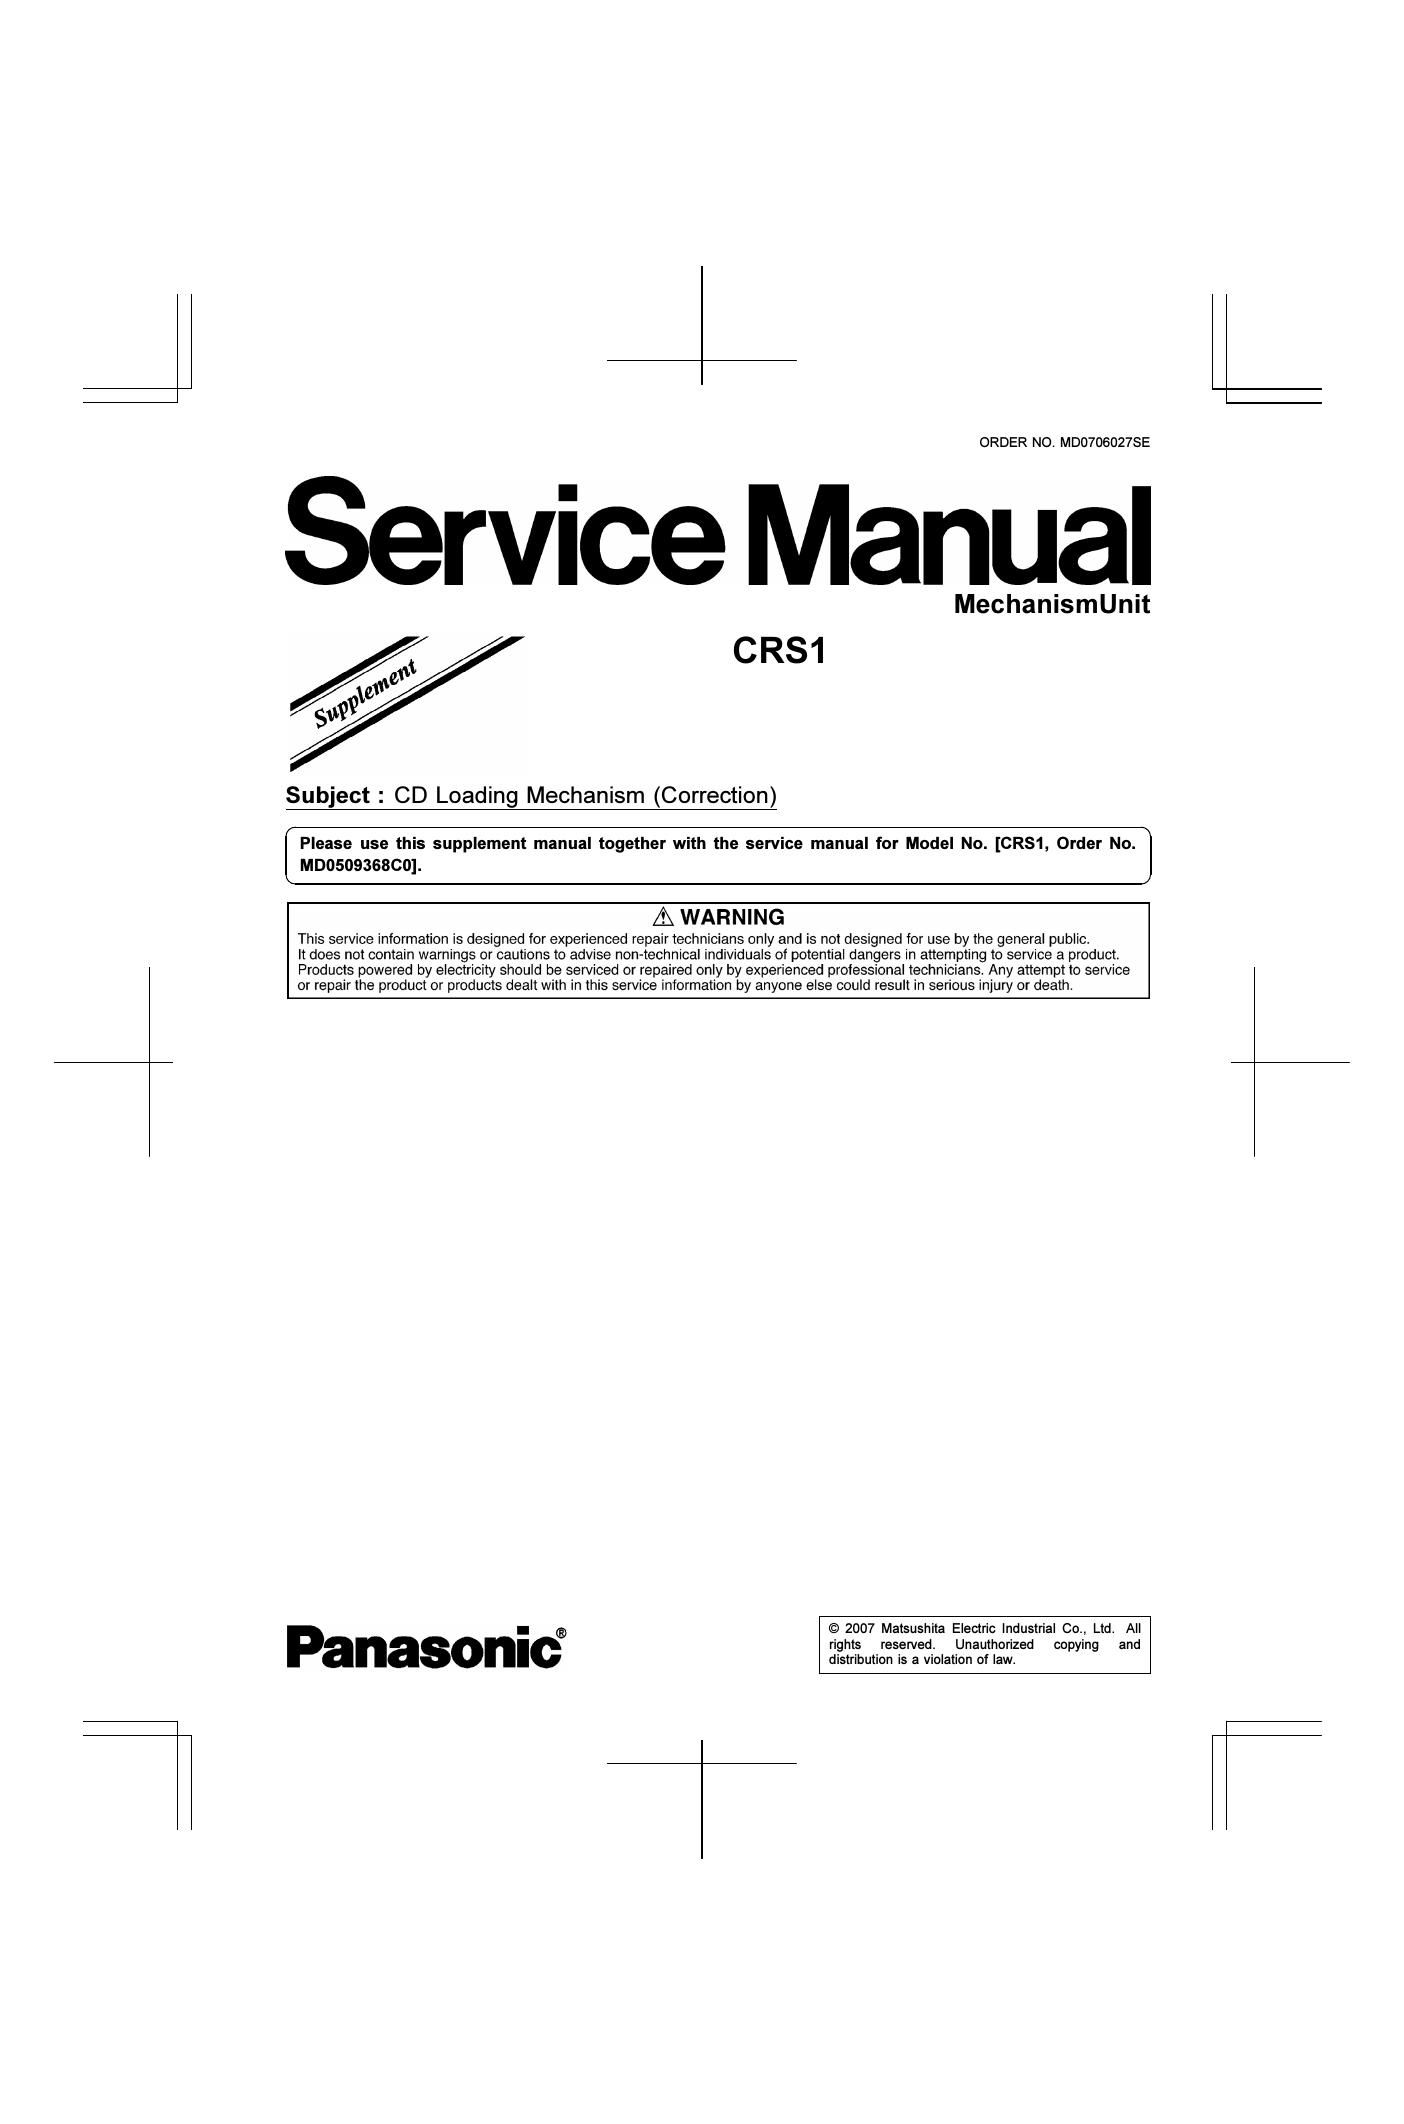 panasonic crs 1 service manual